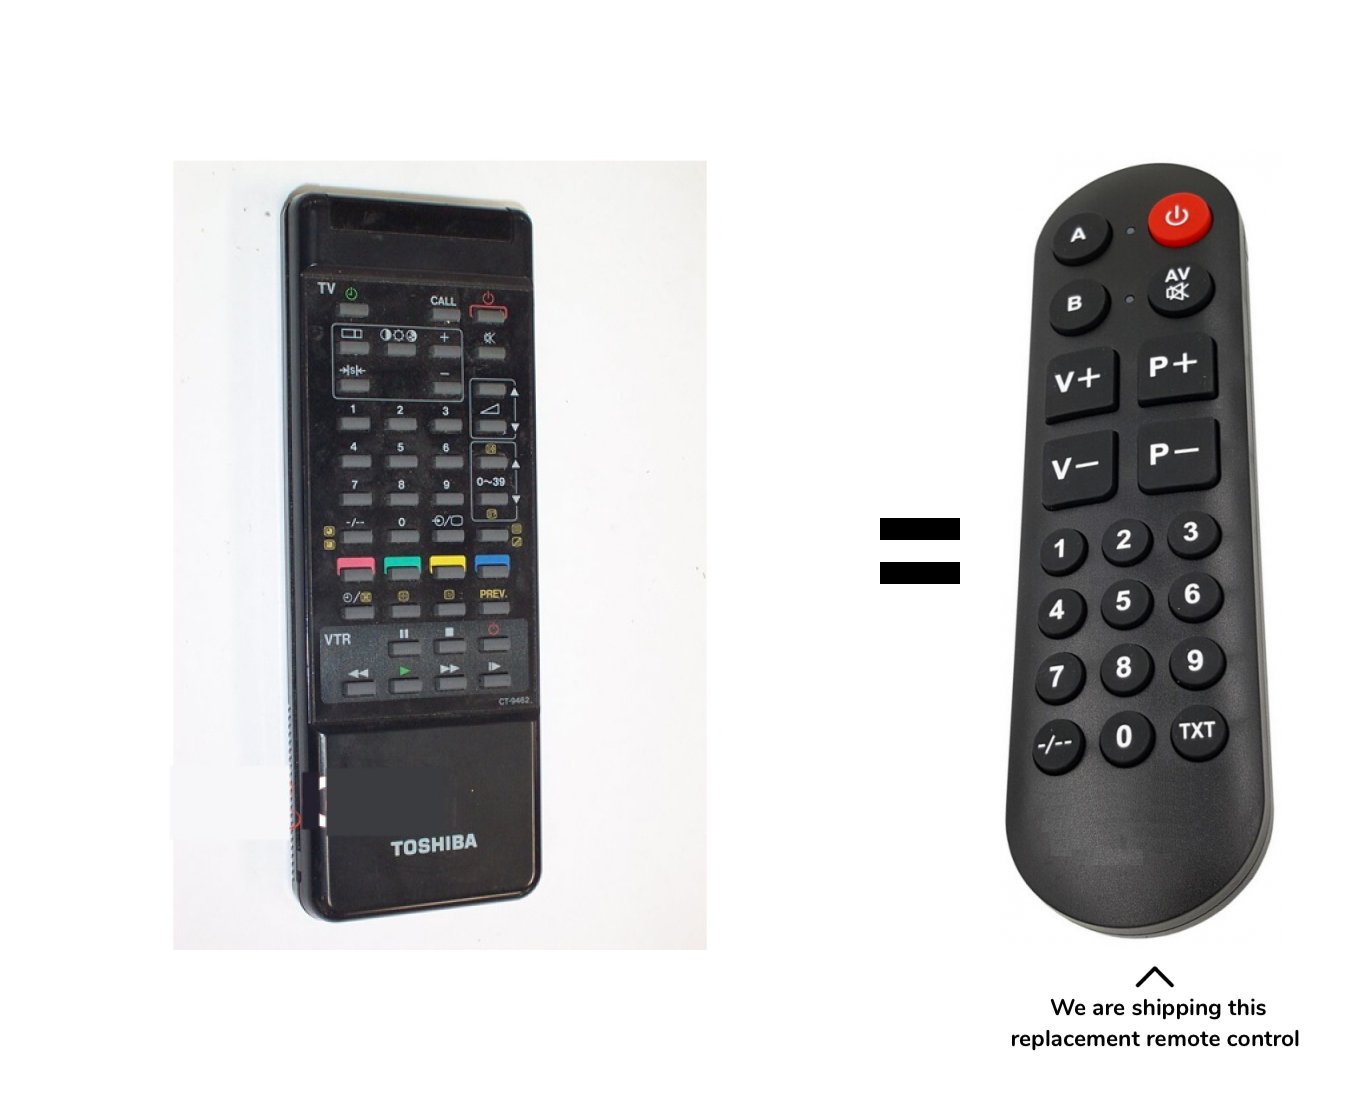 Toshiba CT-9552 remote control for seniors